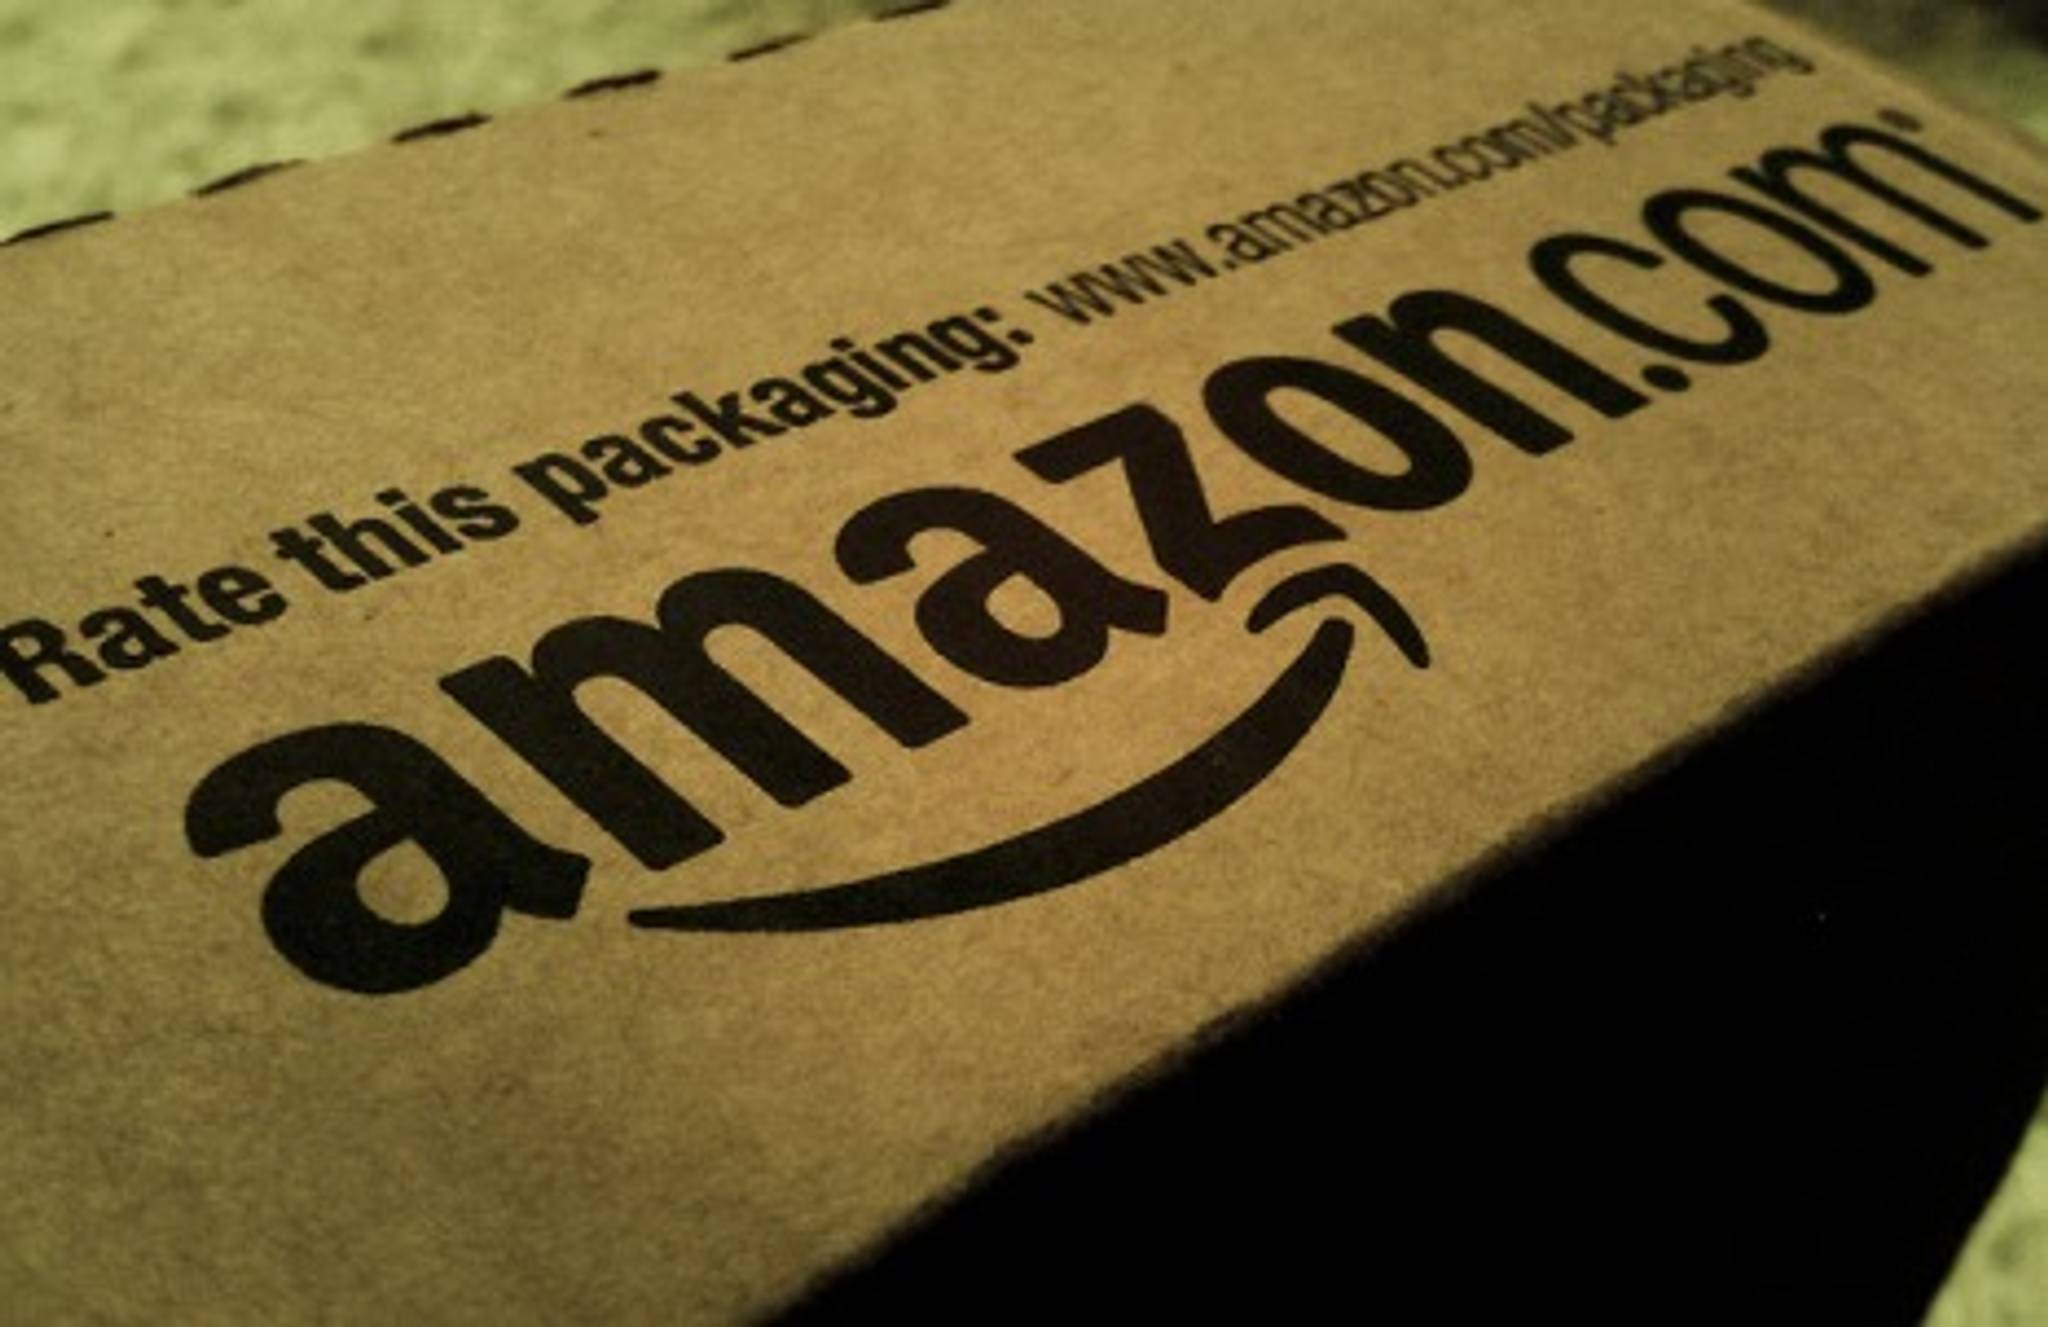 Amazon turns video views into shopping